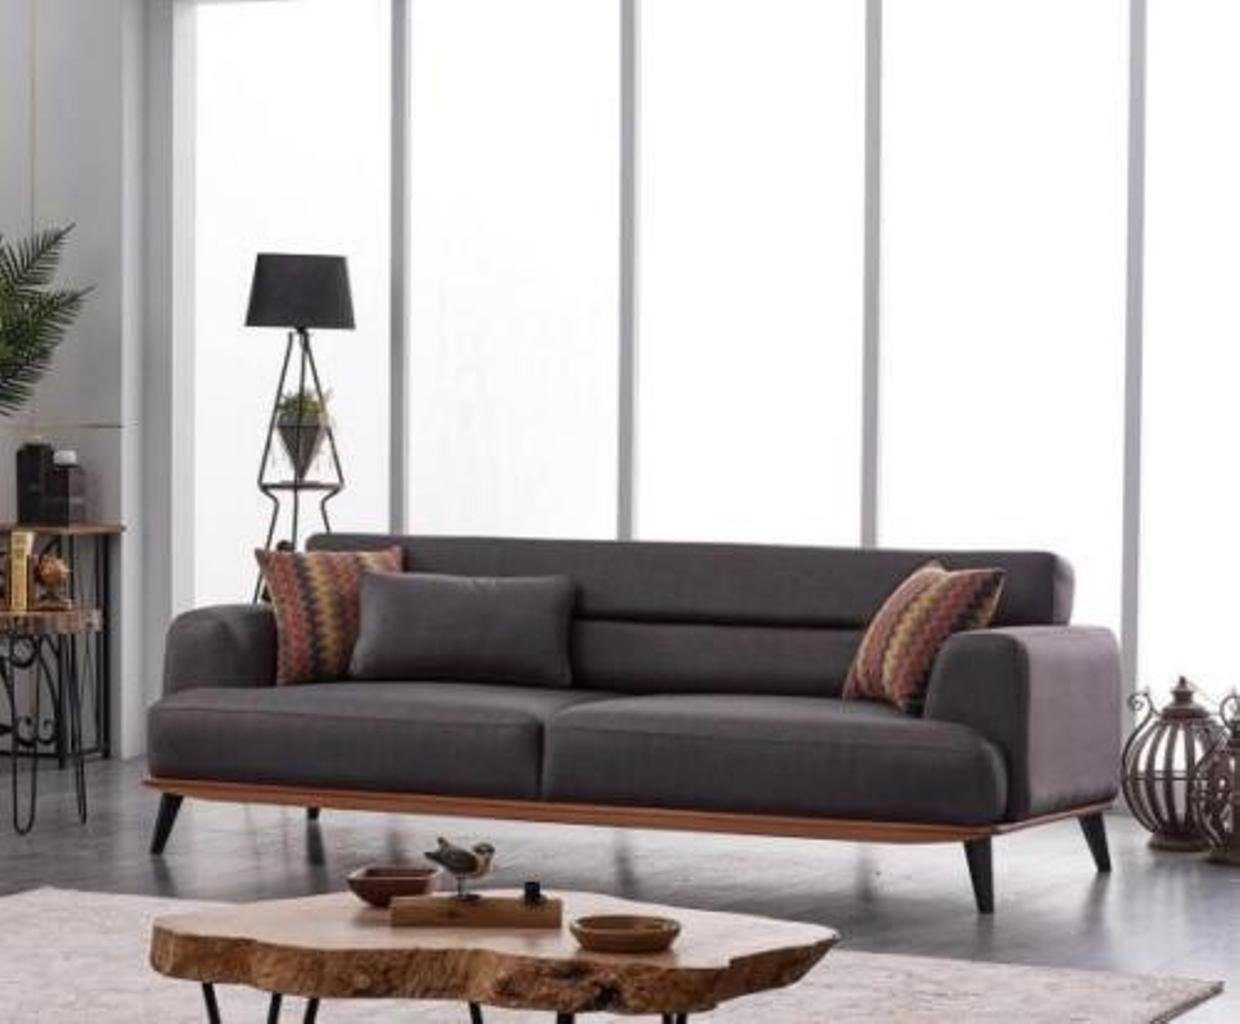 JVmoebel 3-Sitzer Graue Sofa 3 Sitzer Textil Möbel Moderner Designer Dreisitzer Stoff, 1 Teile, Made in Europa